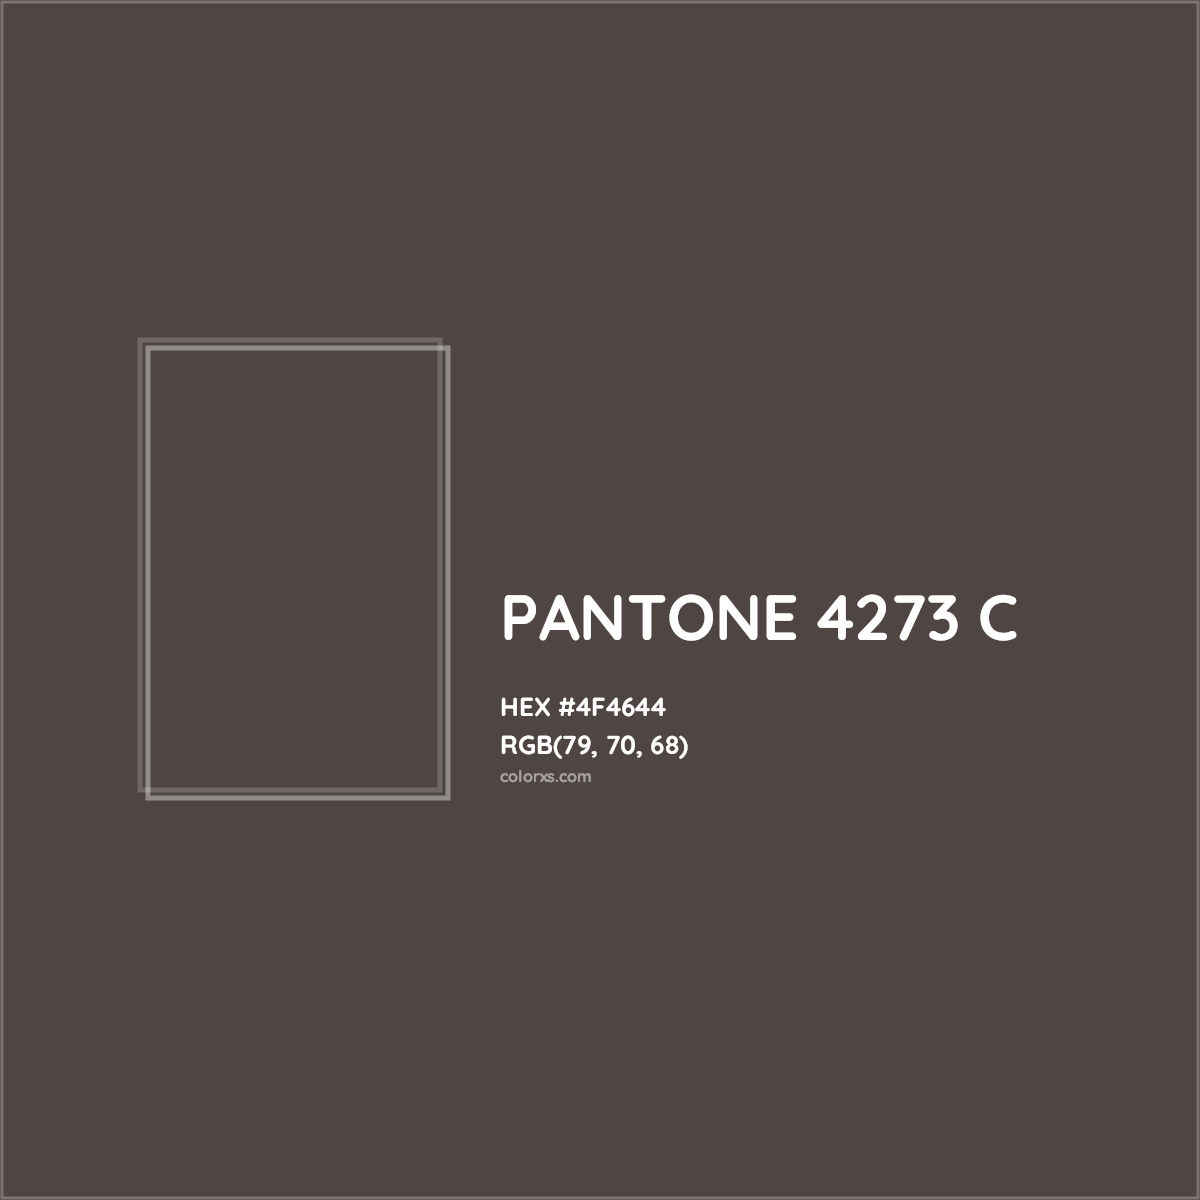 HEX #4F4644 PANTONE 4273 C CMS Pantone PMS - Color Code